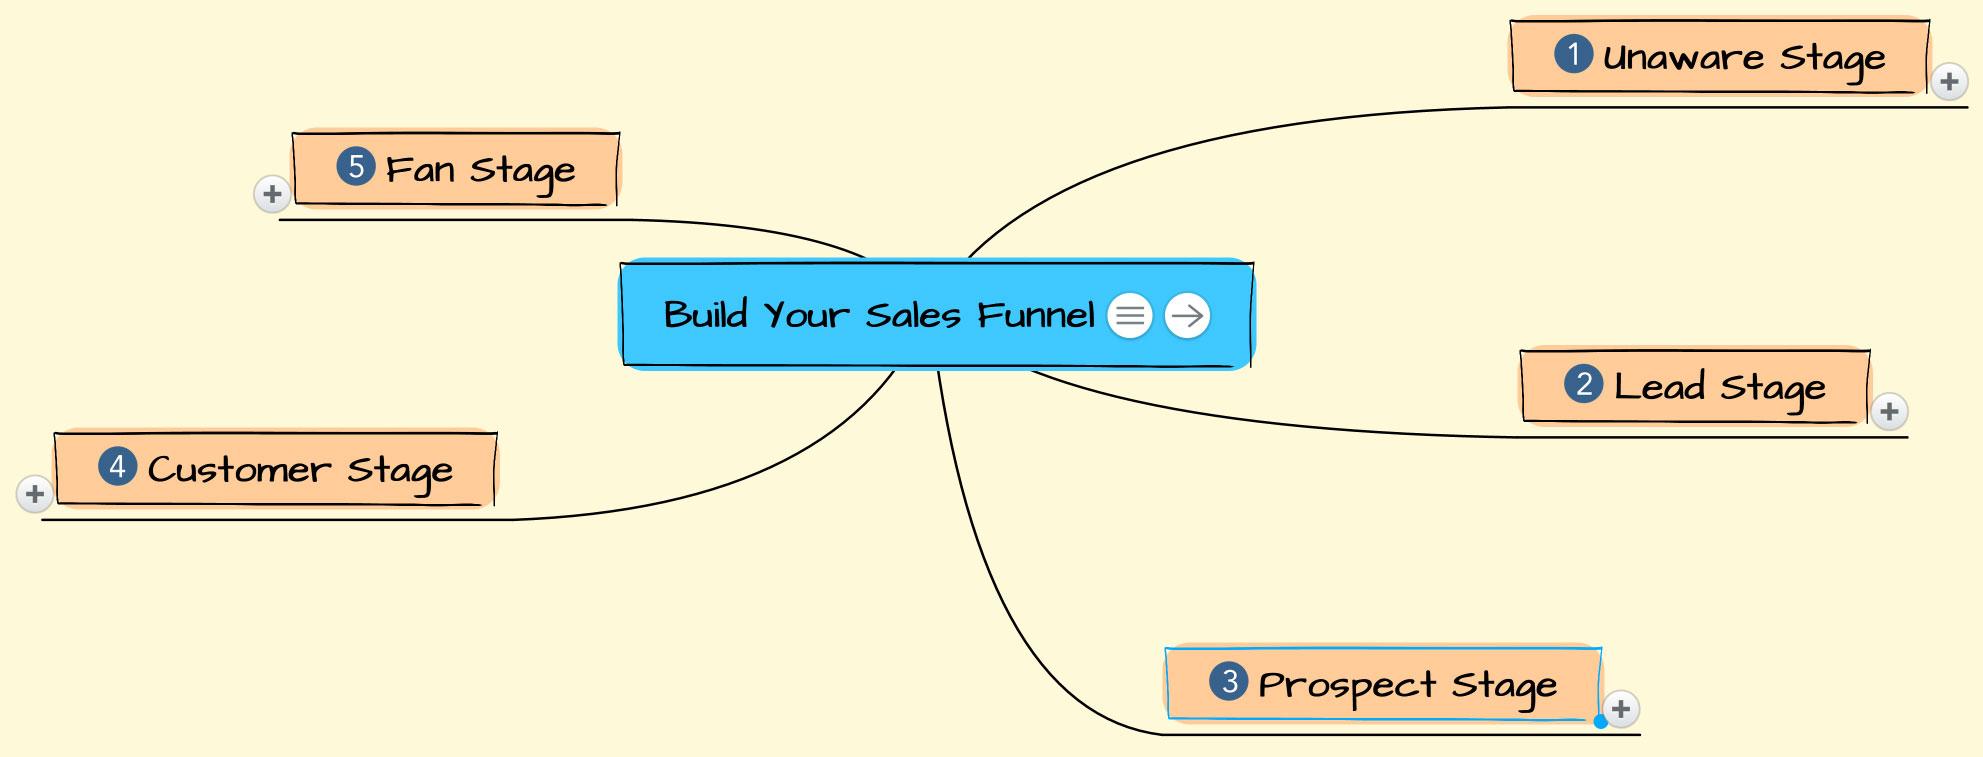 Build Your Sales Funnel Mind Map